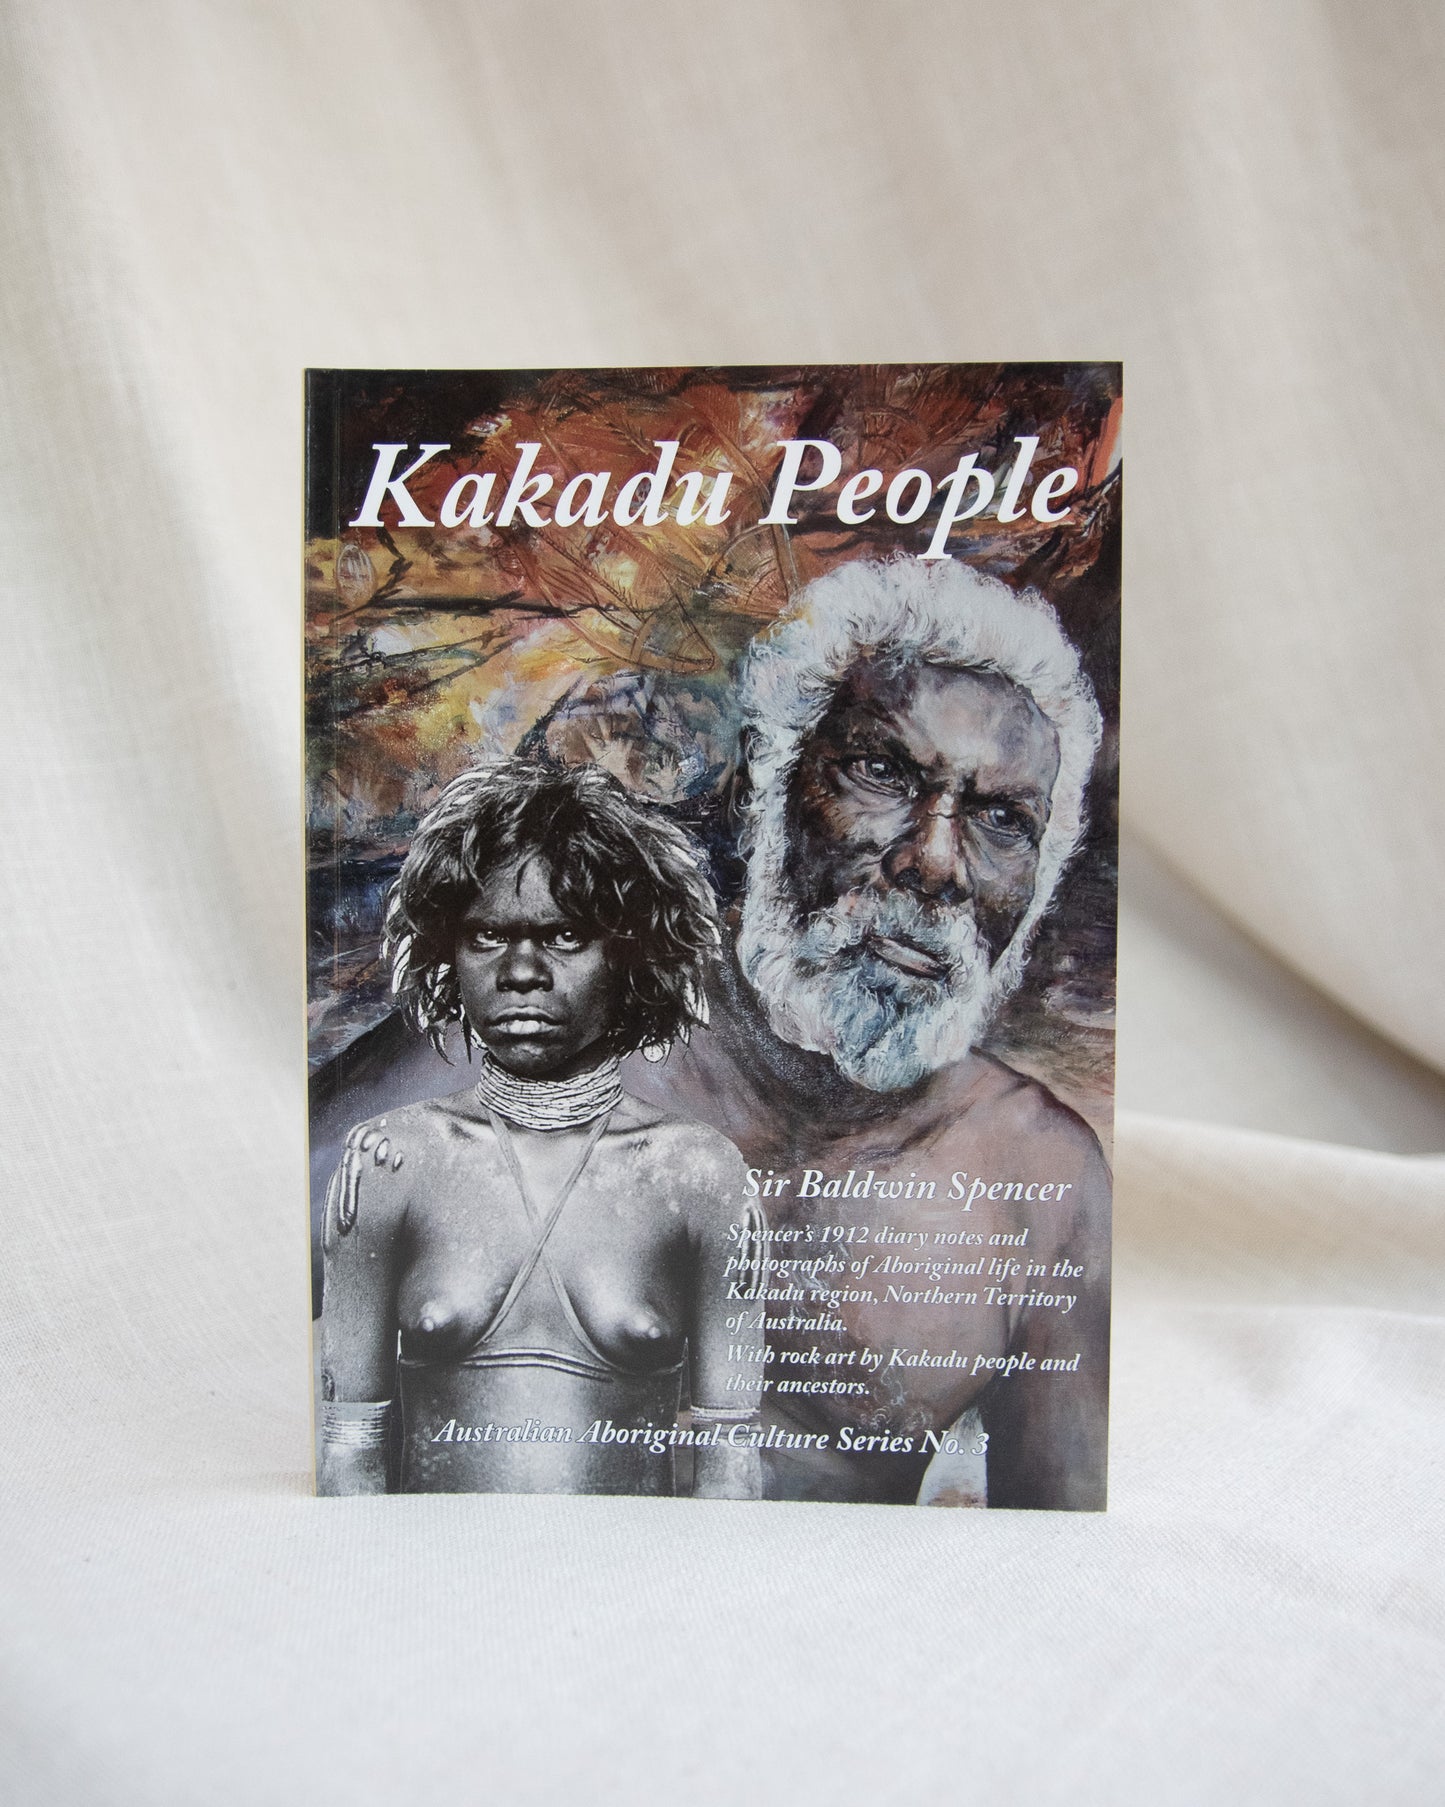 Kakadu People - Australian Aboriginal Culture Series No.3